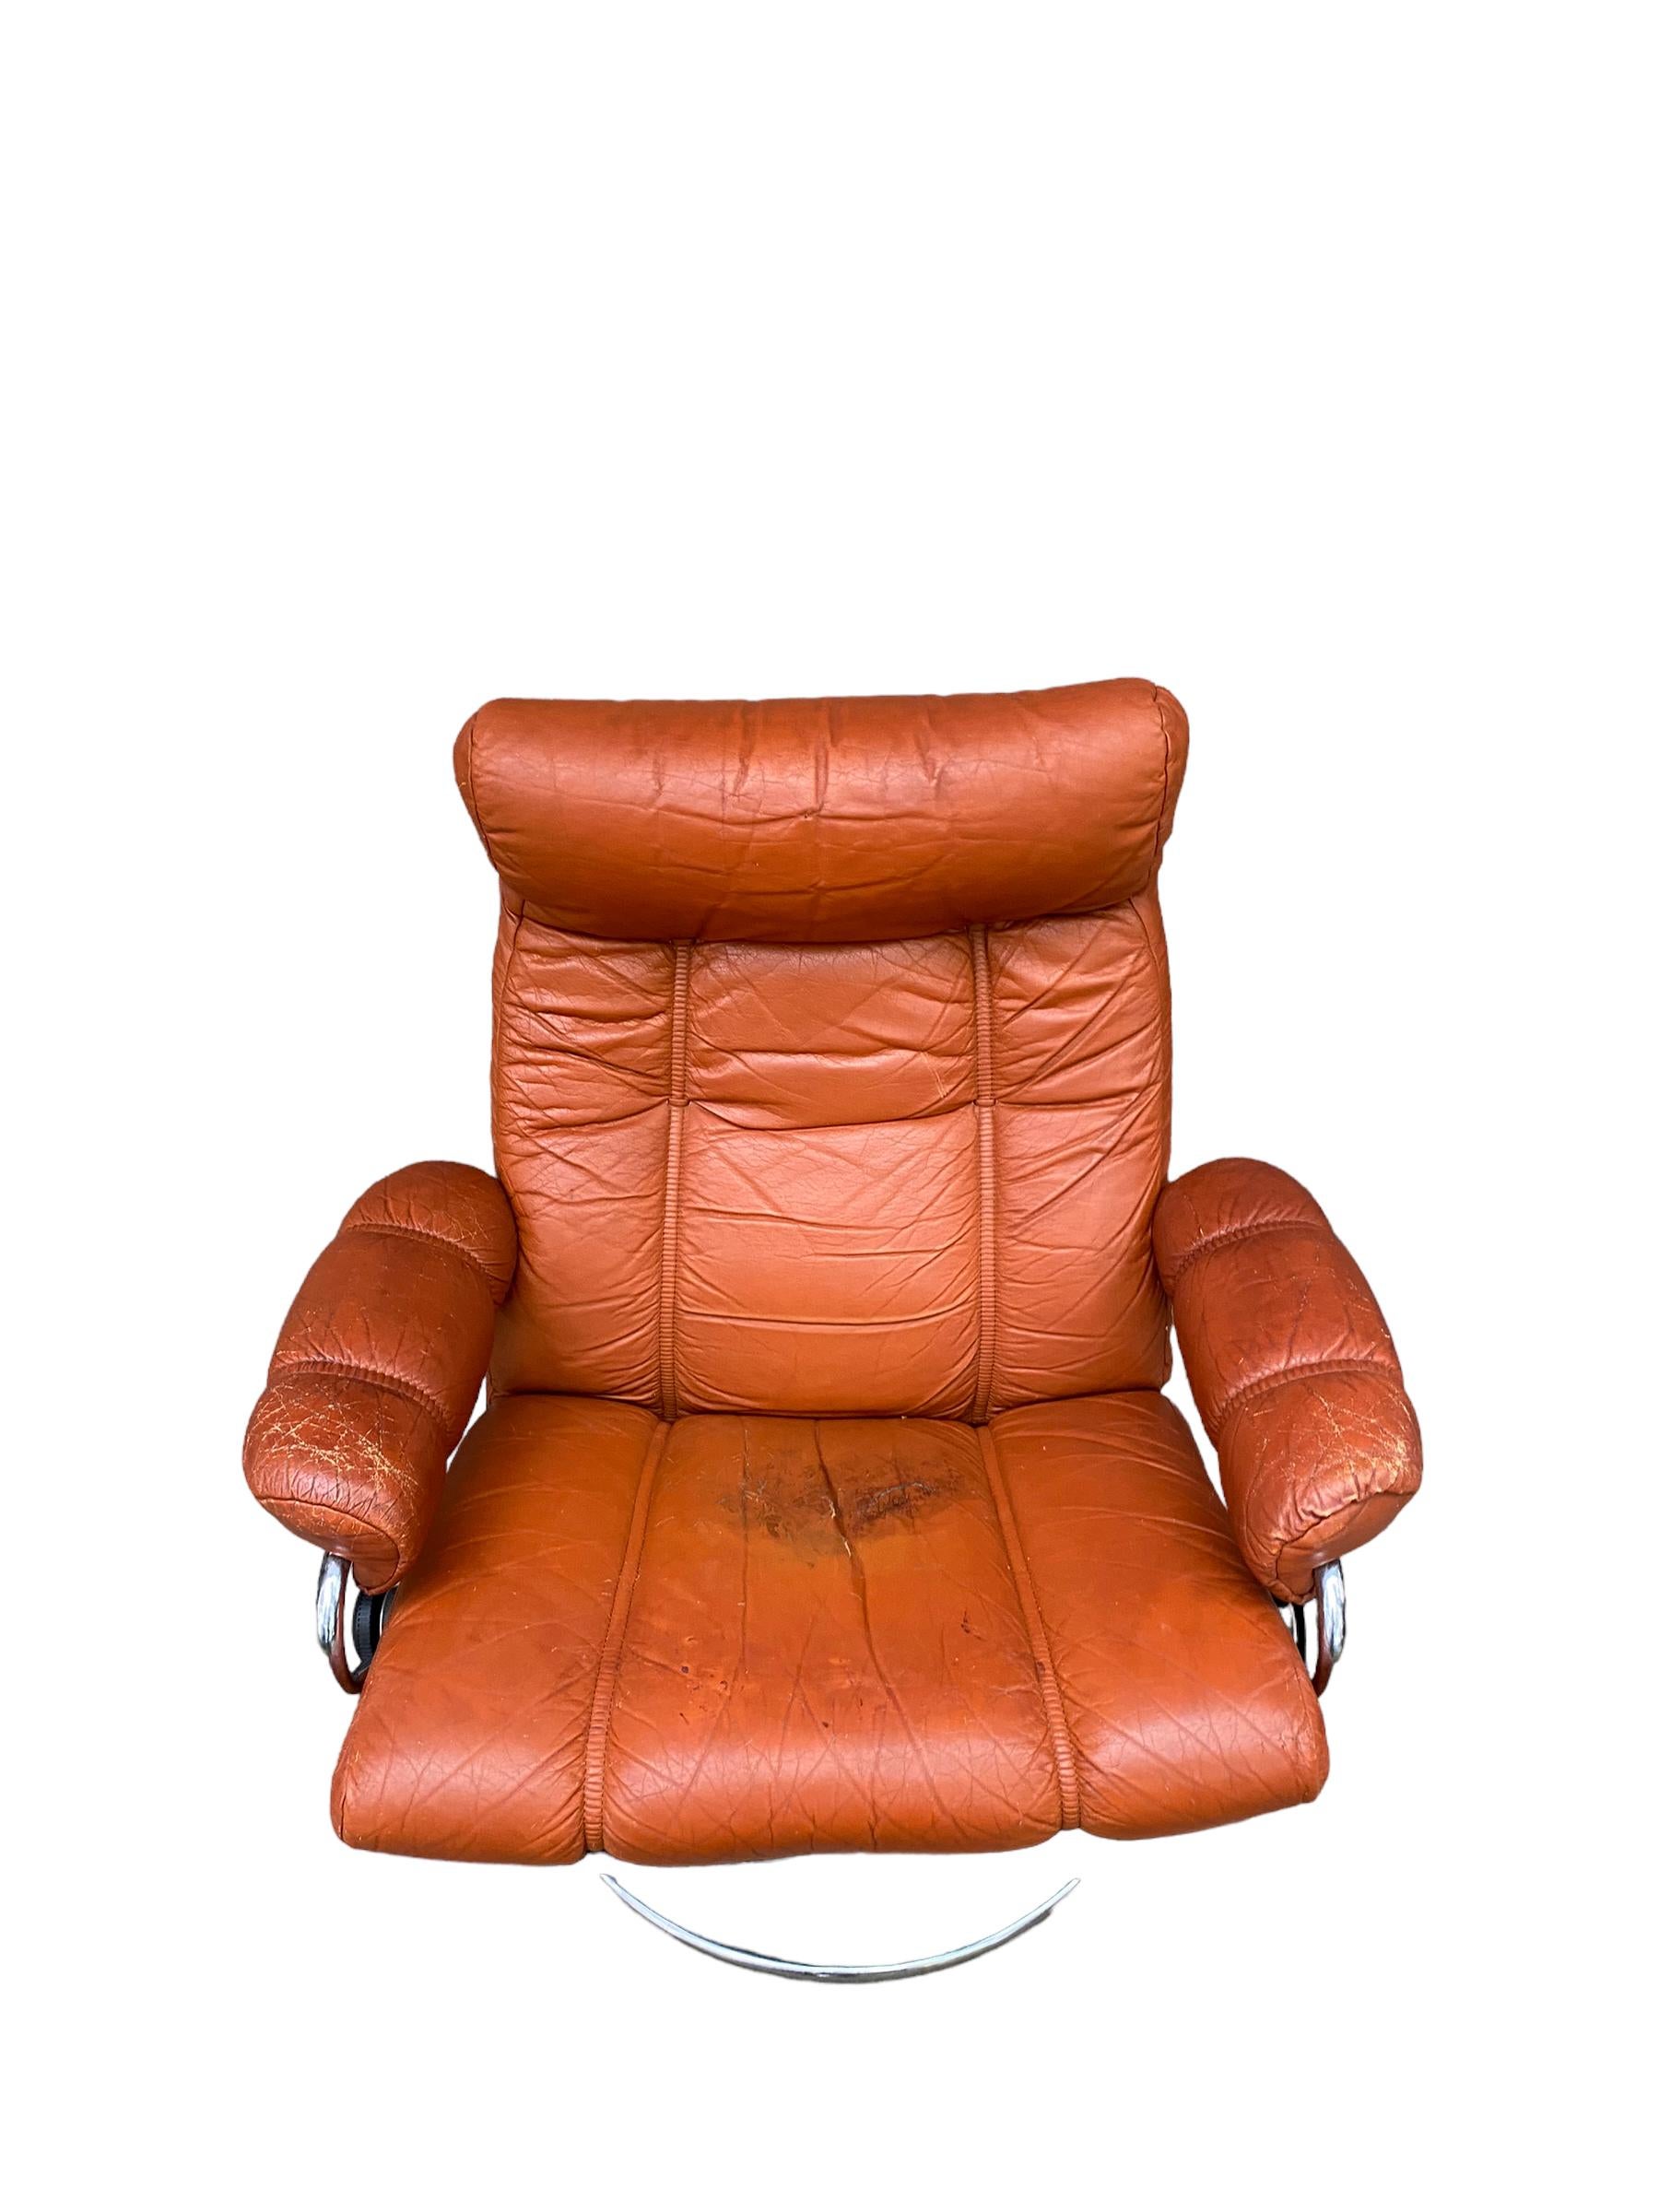 Ekornes Stressless Reclining Lounge Chair and Ottoman 8